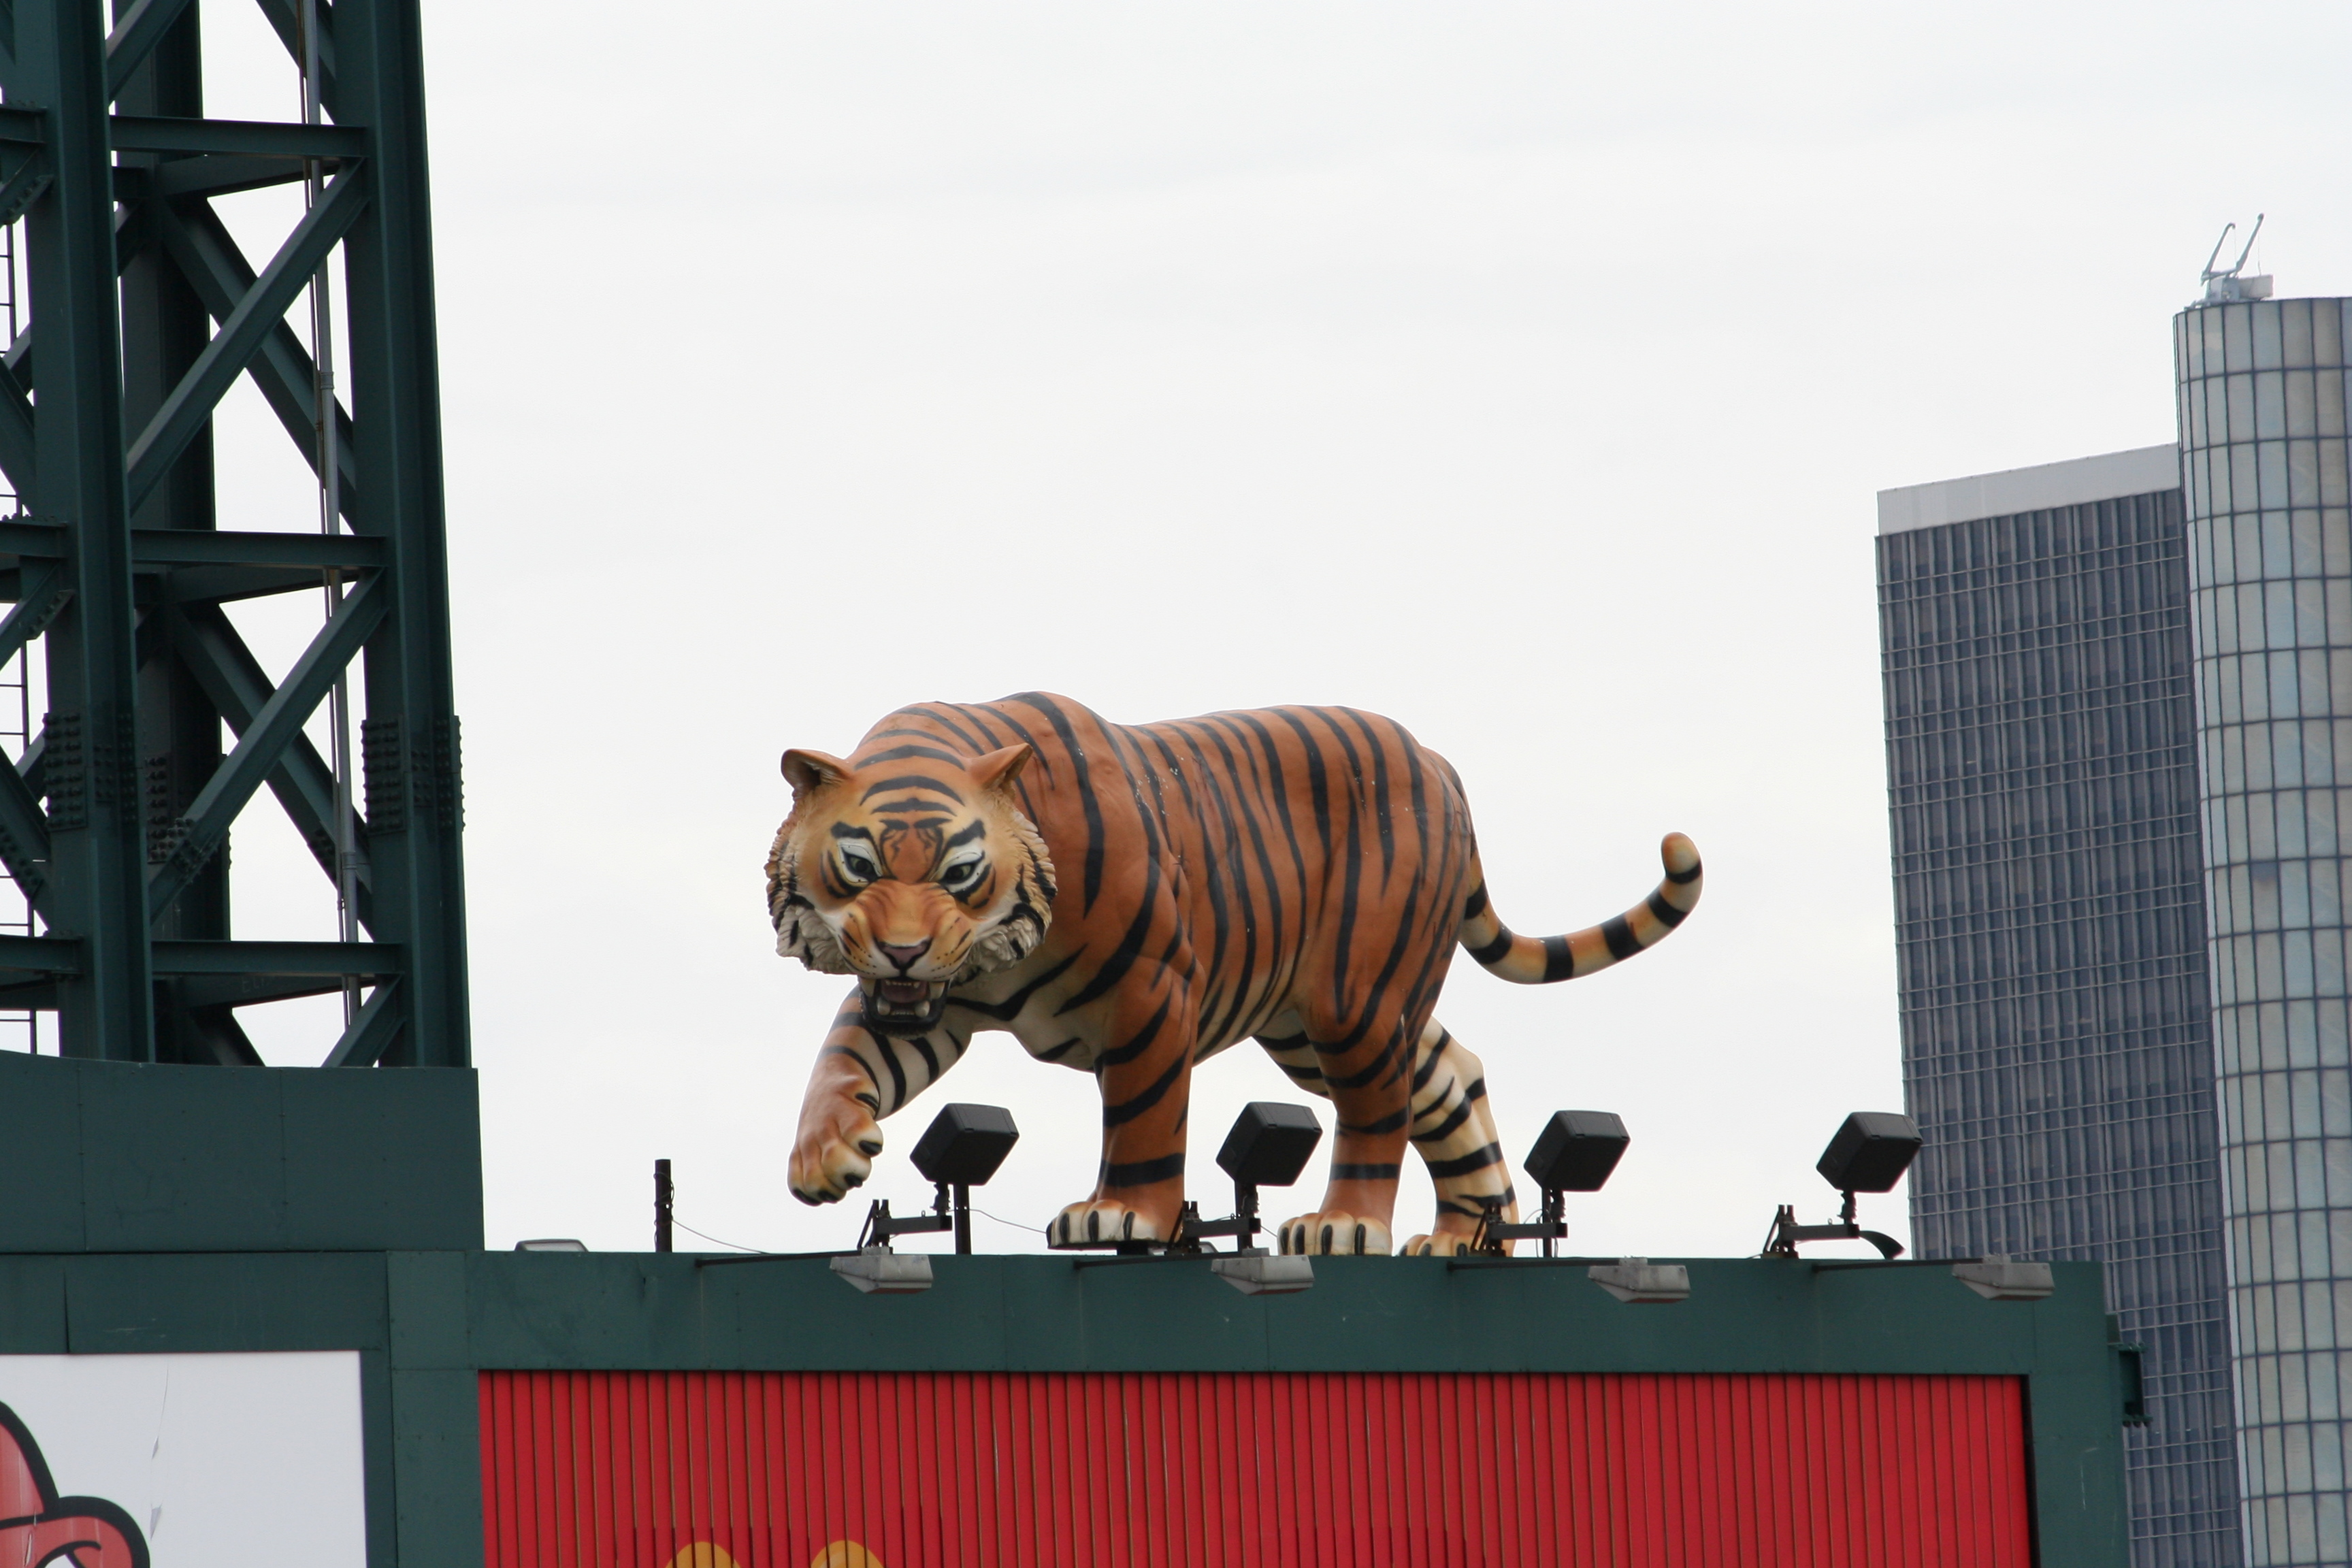 File:Tiger Statue of Comerica Park.jpg - Wikimedia Commons